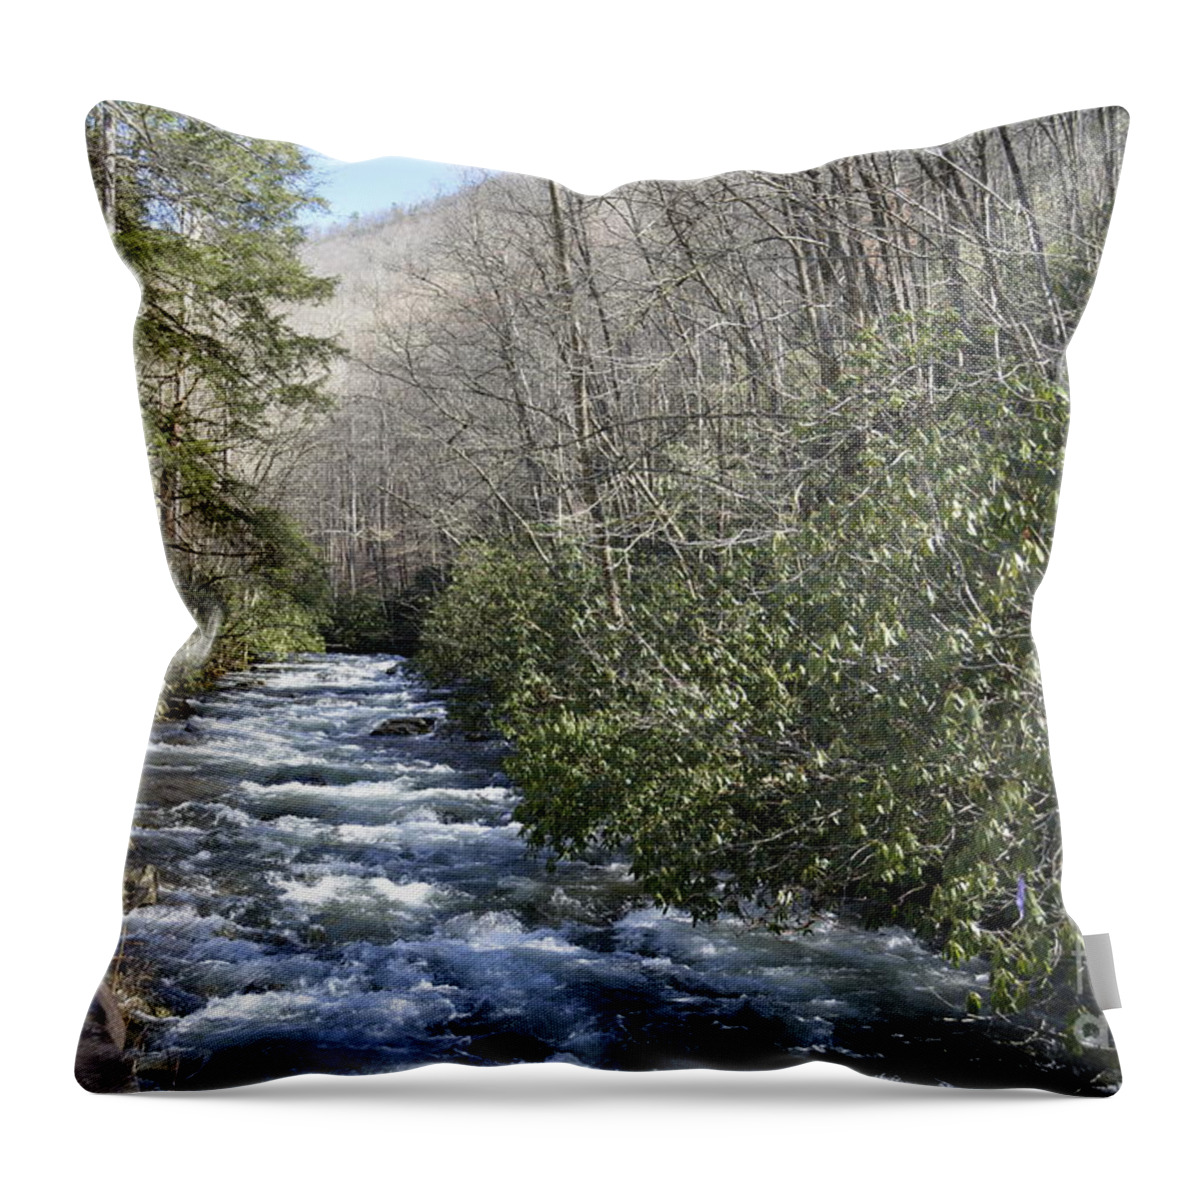 Streams Throw Pillow featuring the digital art Appalachian Mountain Water 2 by Barb Dalton